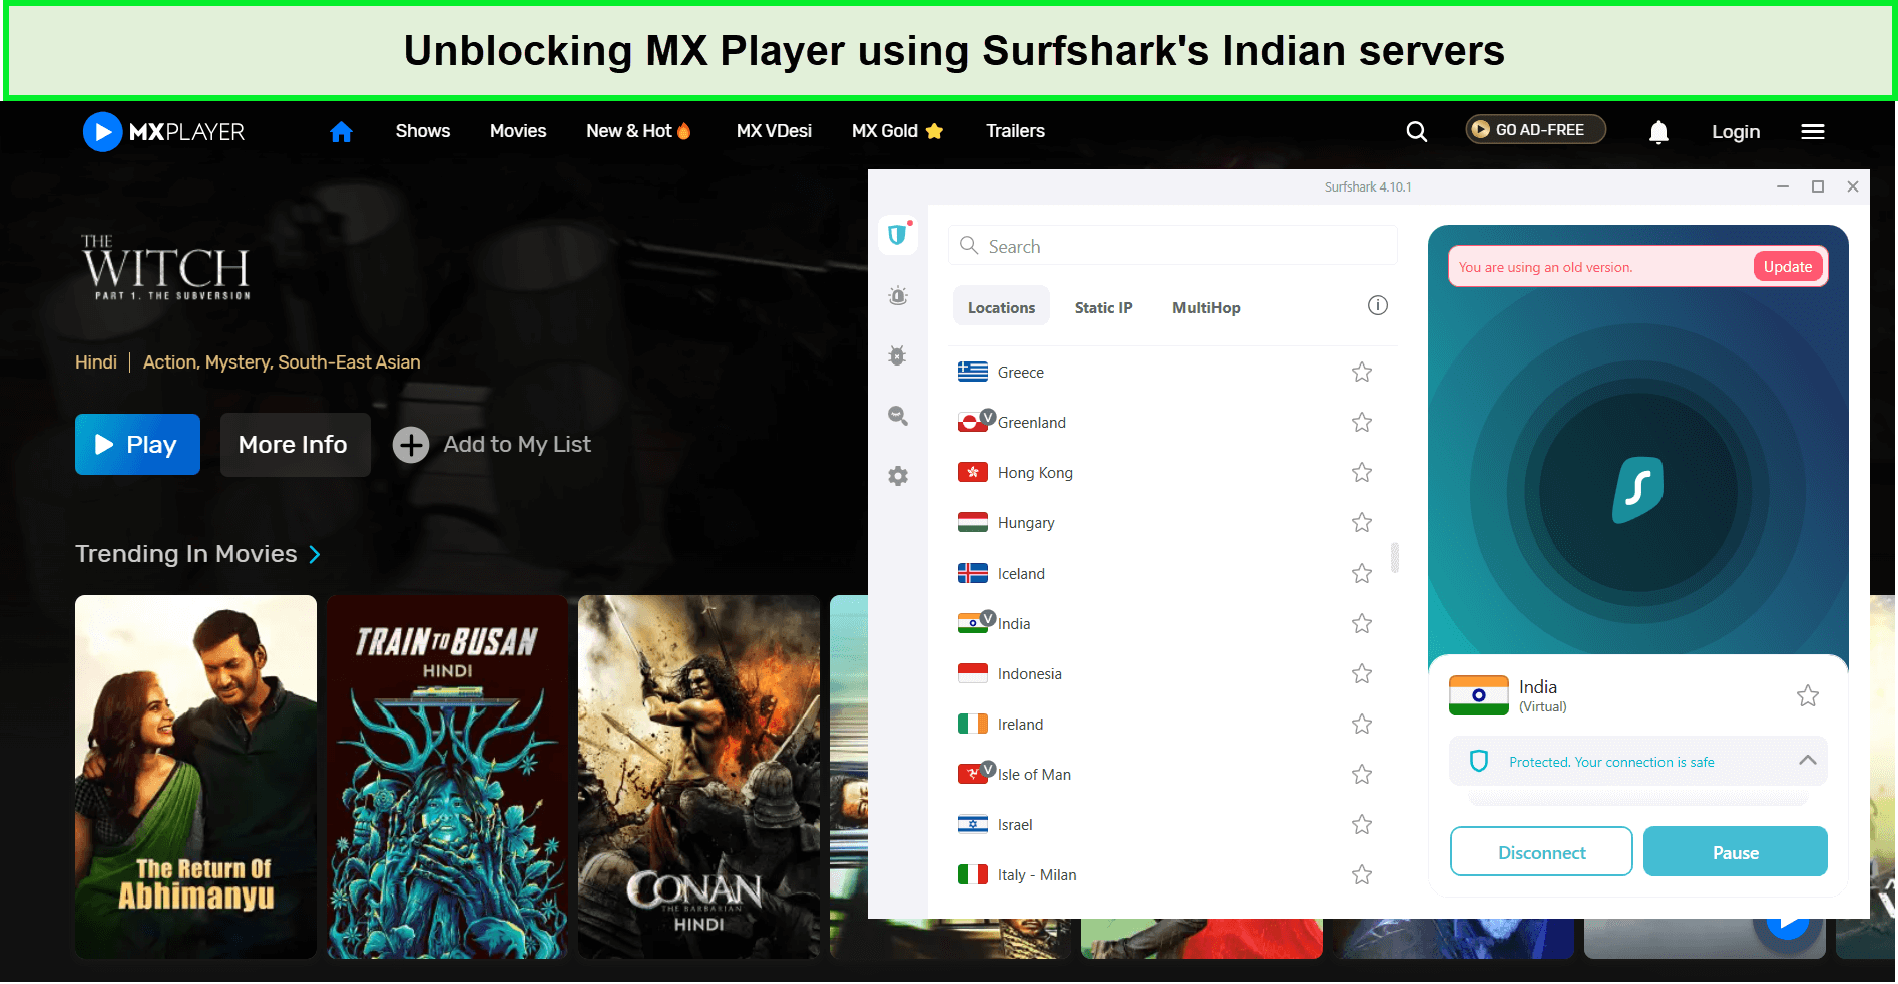 mx-player-in-UAE-unblocked-surfshark